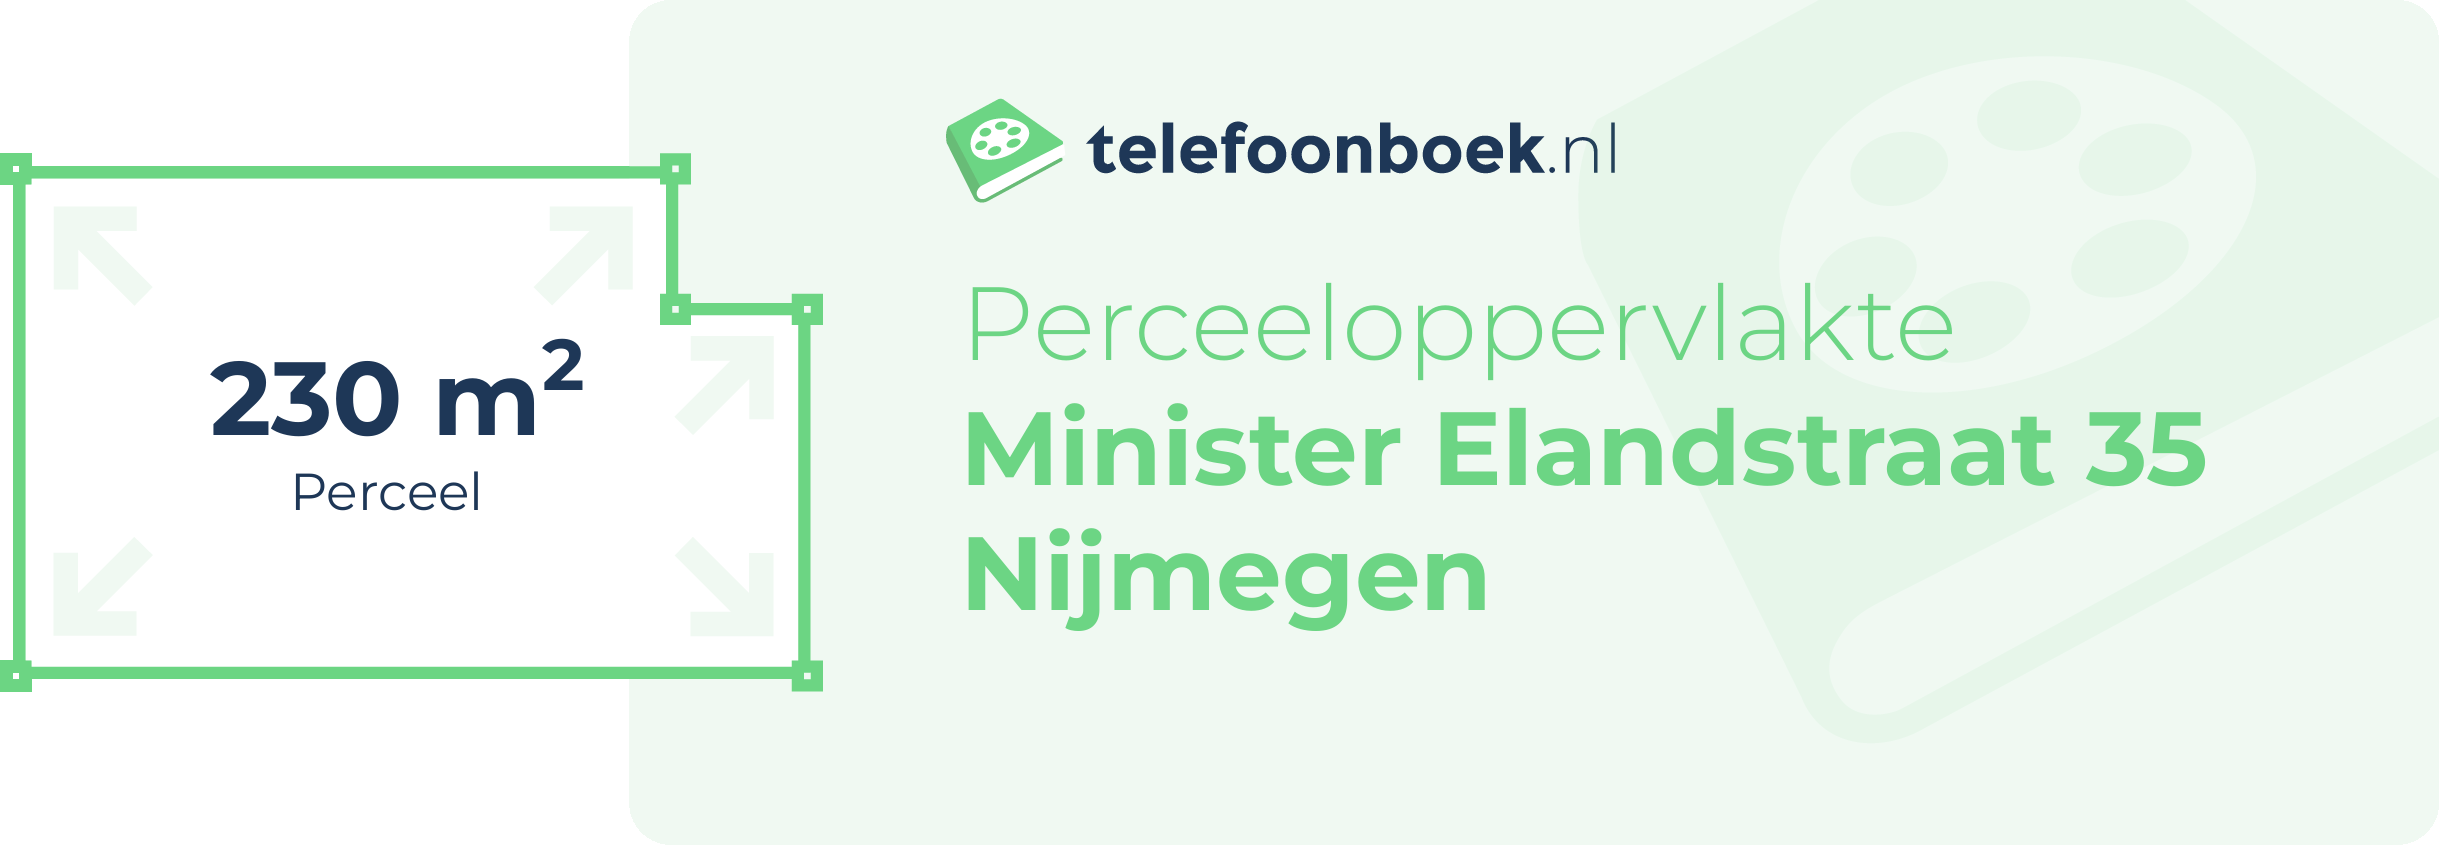 Perceeloppervlakte Minister Elandstraat 35 Nijmegen